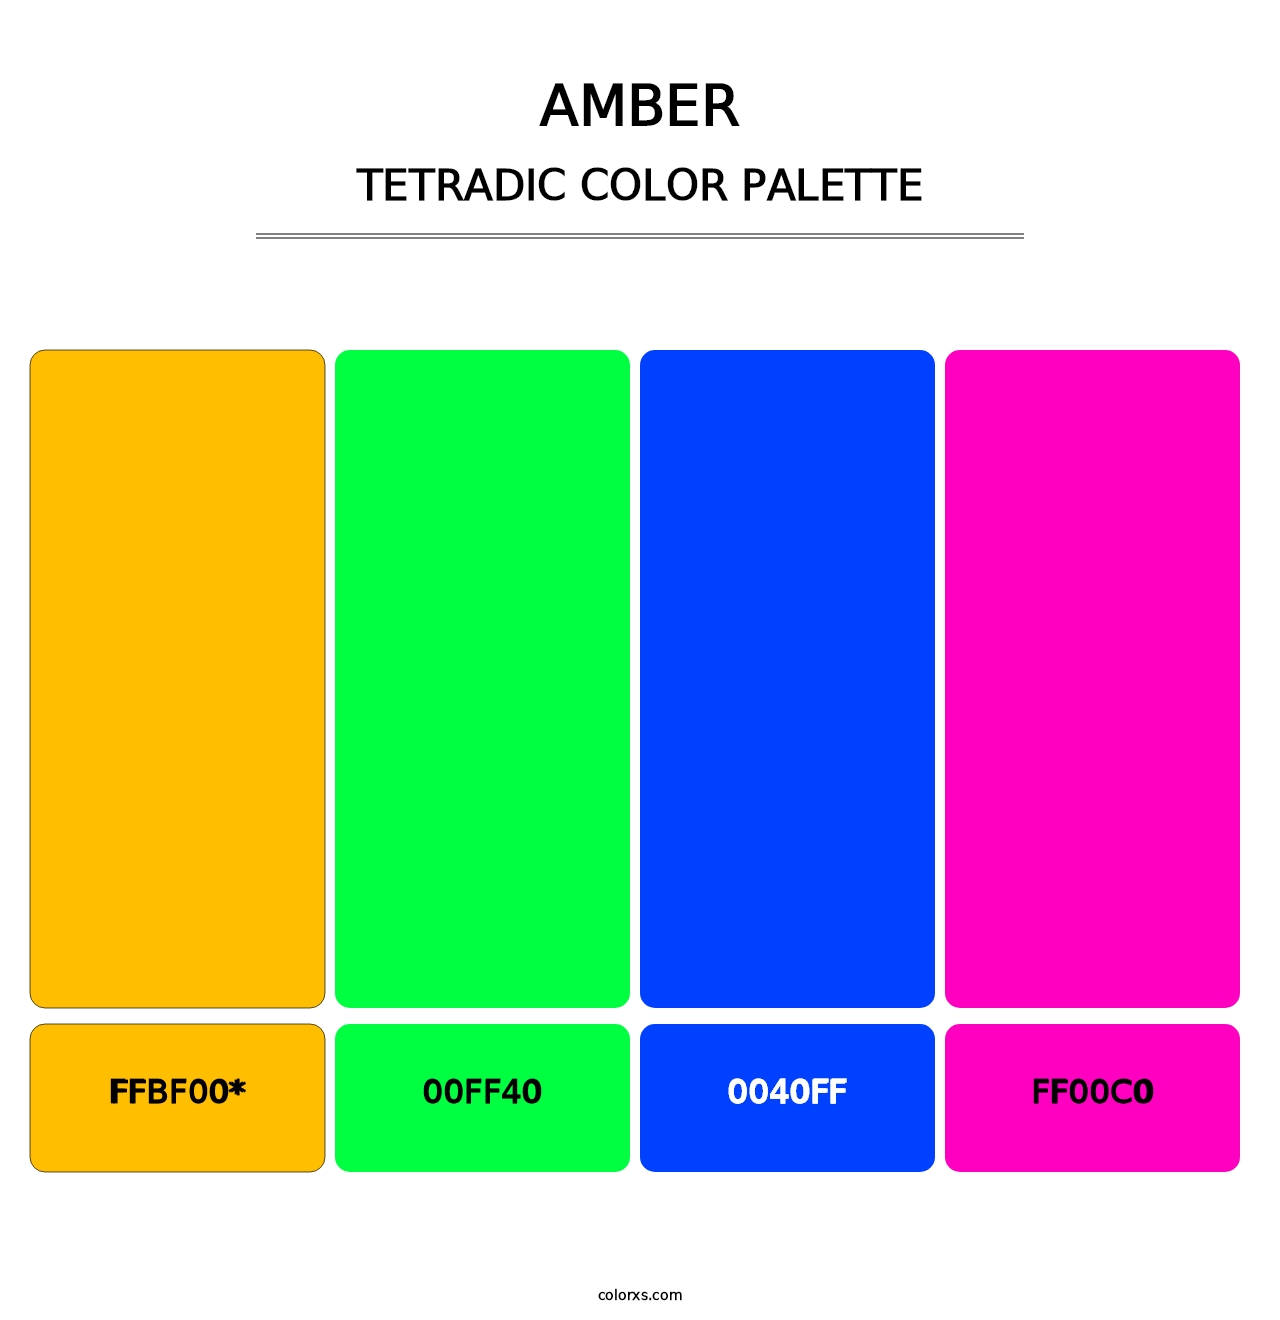 Amber - Tetradic Color Palette